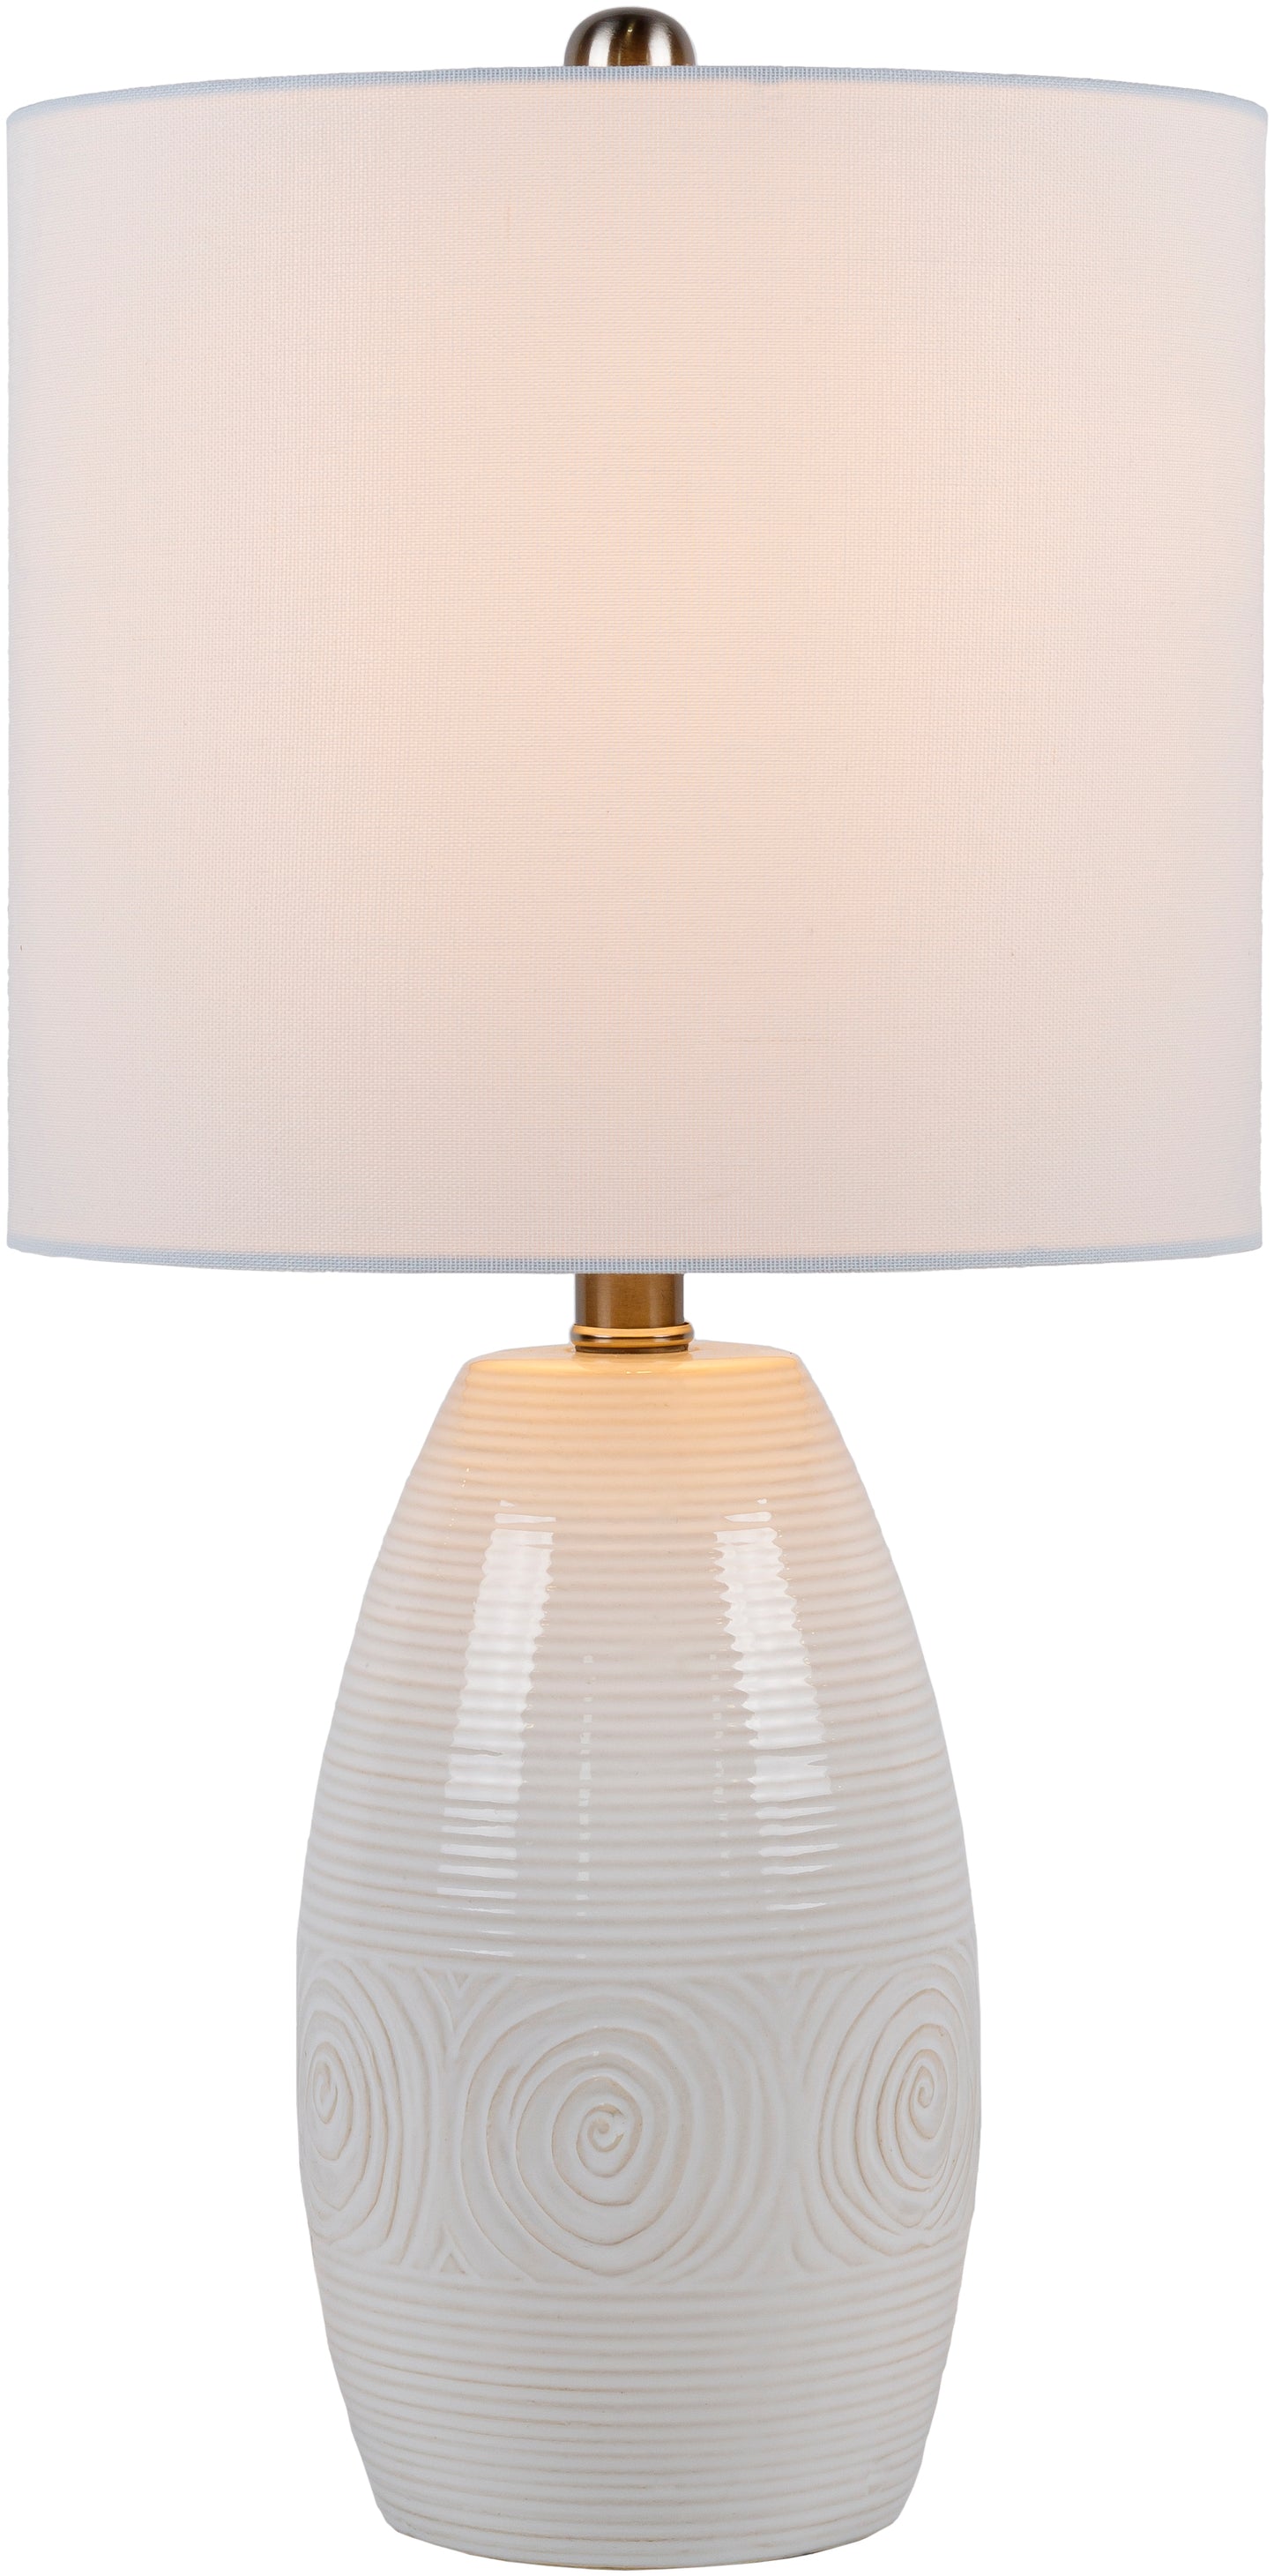 Liara Table Lamp